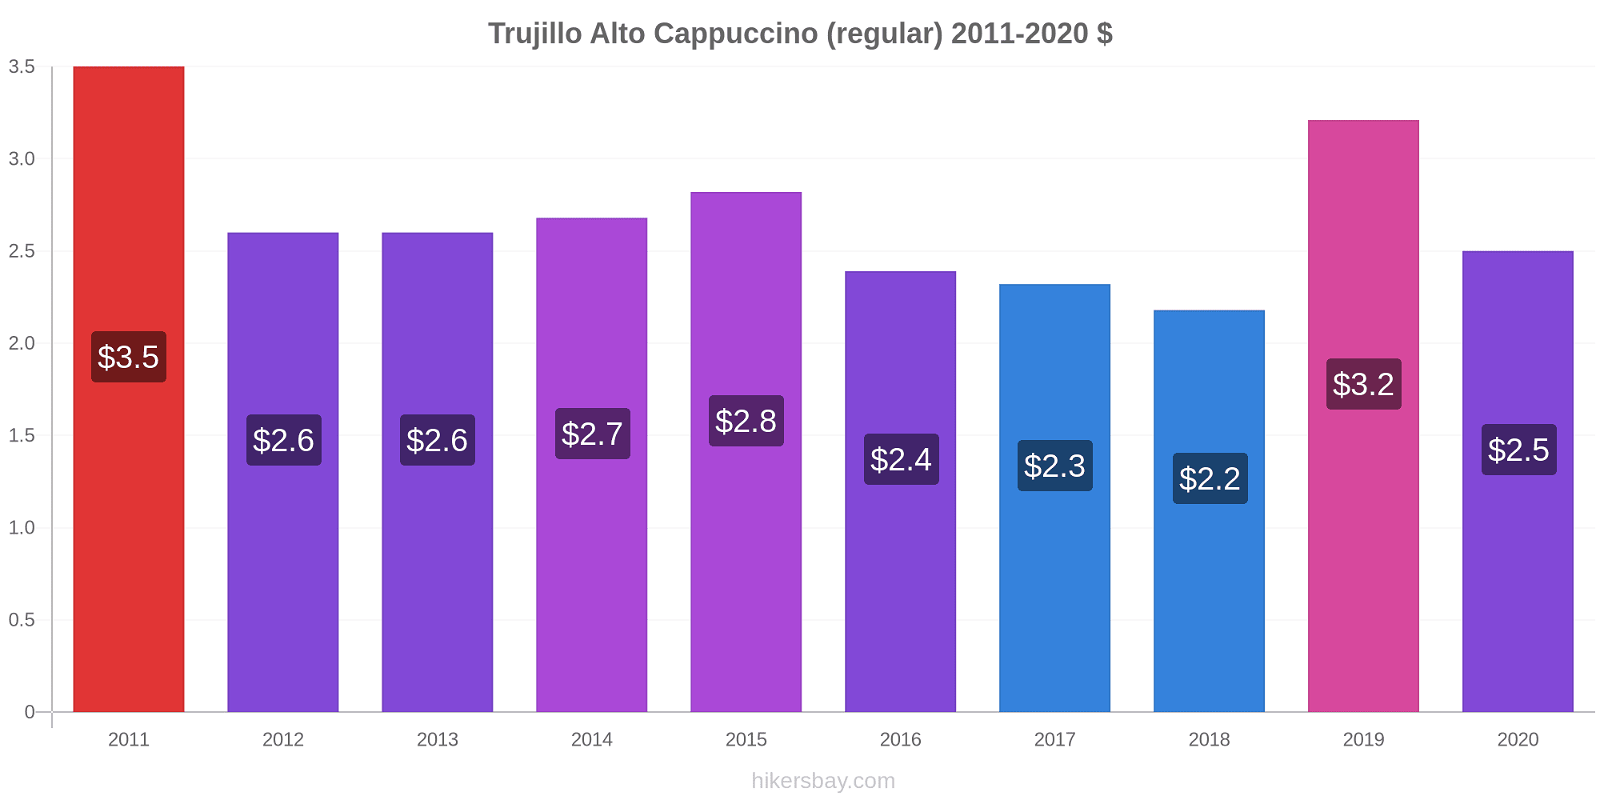 Trujillo Alto price changes Cappuccino (regular) hikersbay.com